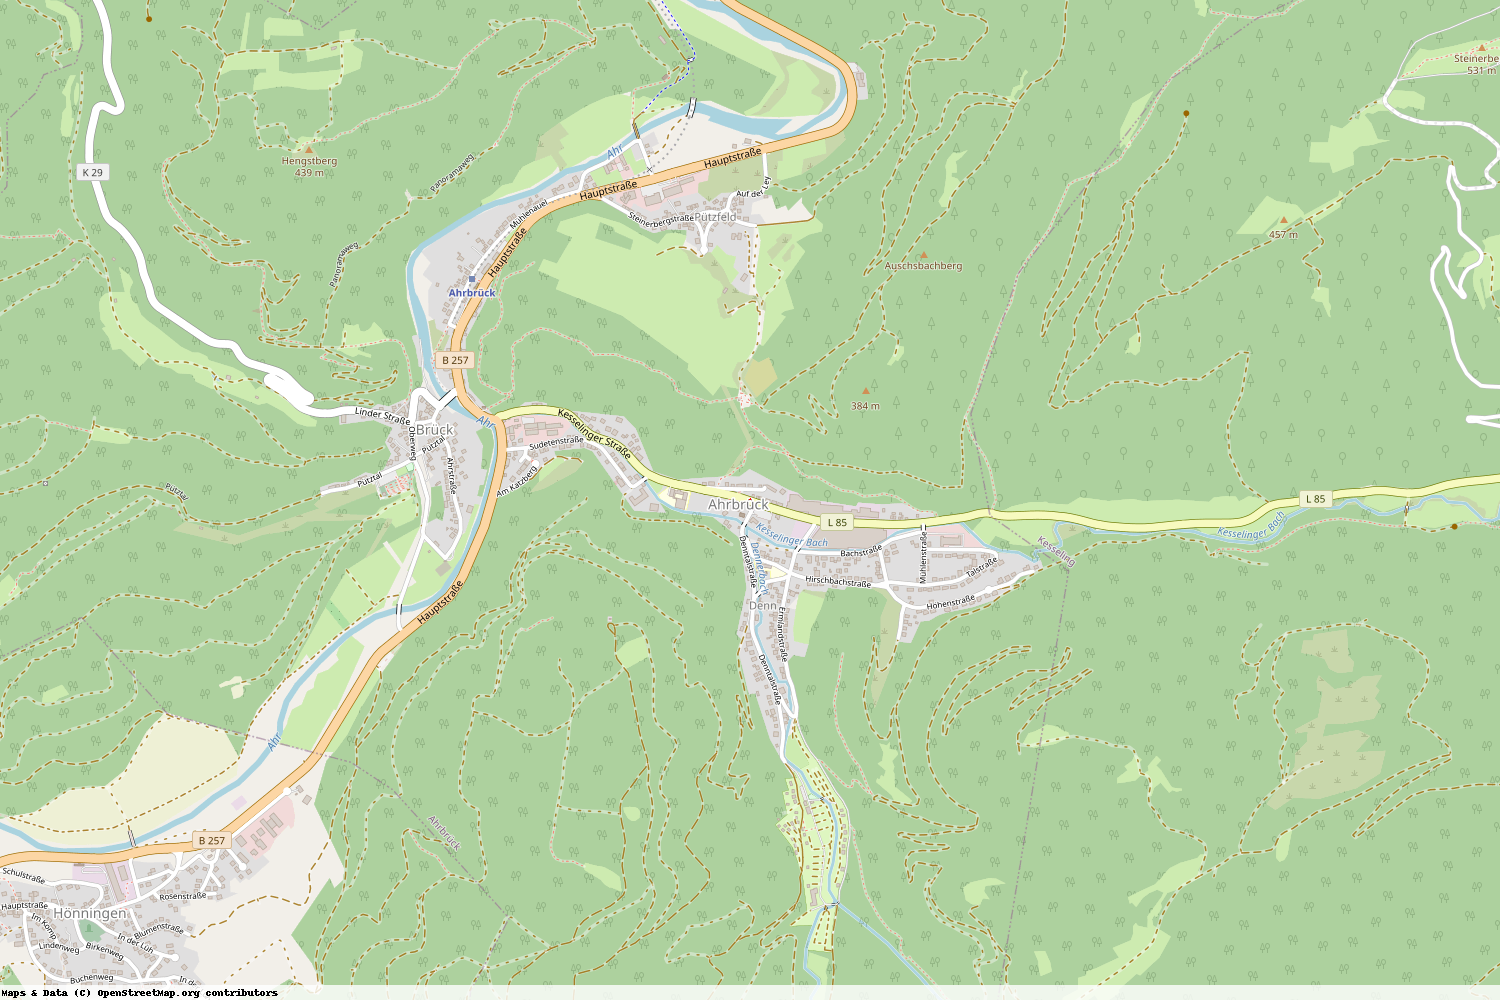 Ist gerade Stromausfall in Rheinland-Pfalz - Ahrweiler - Ahrbrück?